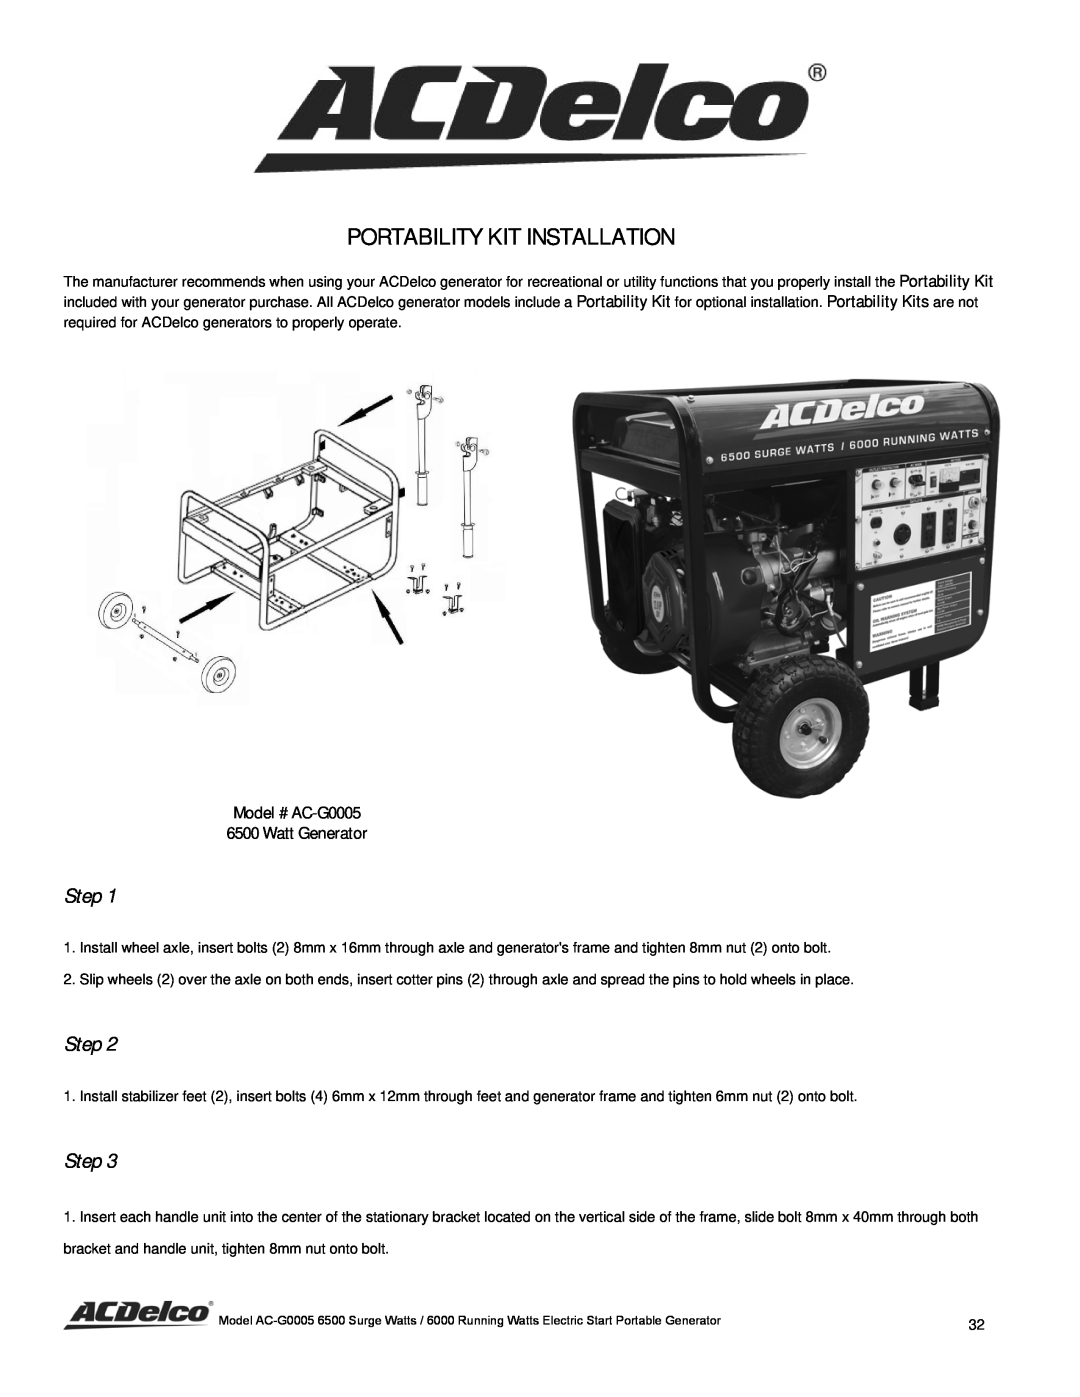 ACDelco instruction manual Portability Kit Installation, Step, Model # AC-G0005 6500 Watt Generator 